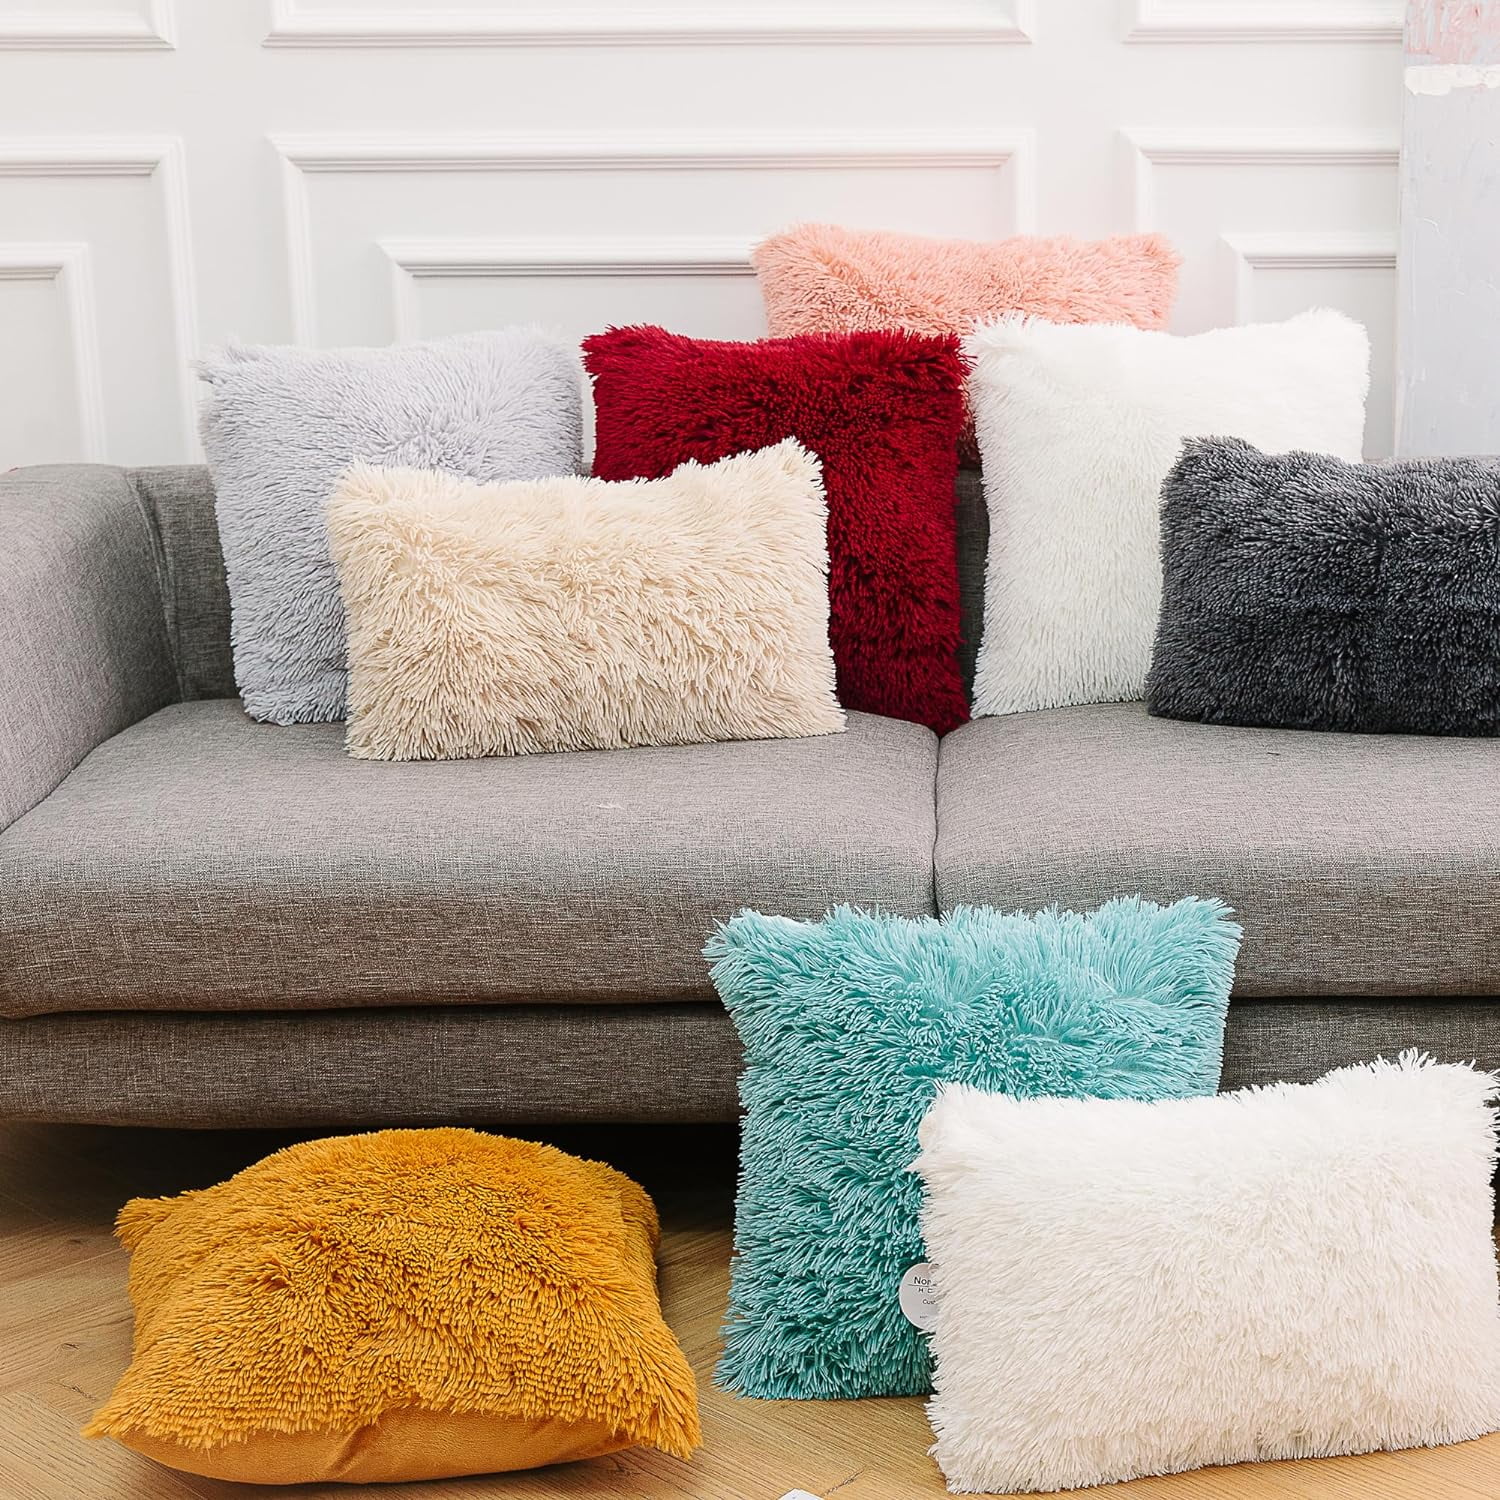 NordECO HOME Luxury Soft Faux Fur Fleece Cushion Cover Pillowcase  Decorative Throw Pillows Covers, No Pillow Insert, 18 x